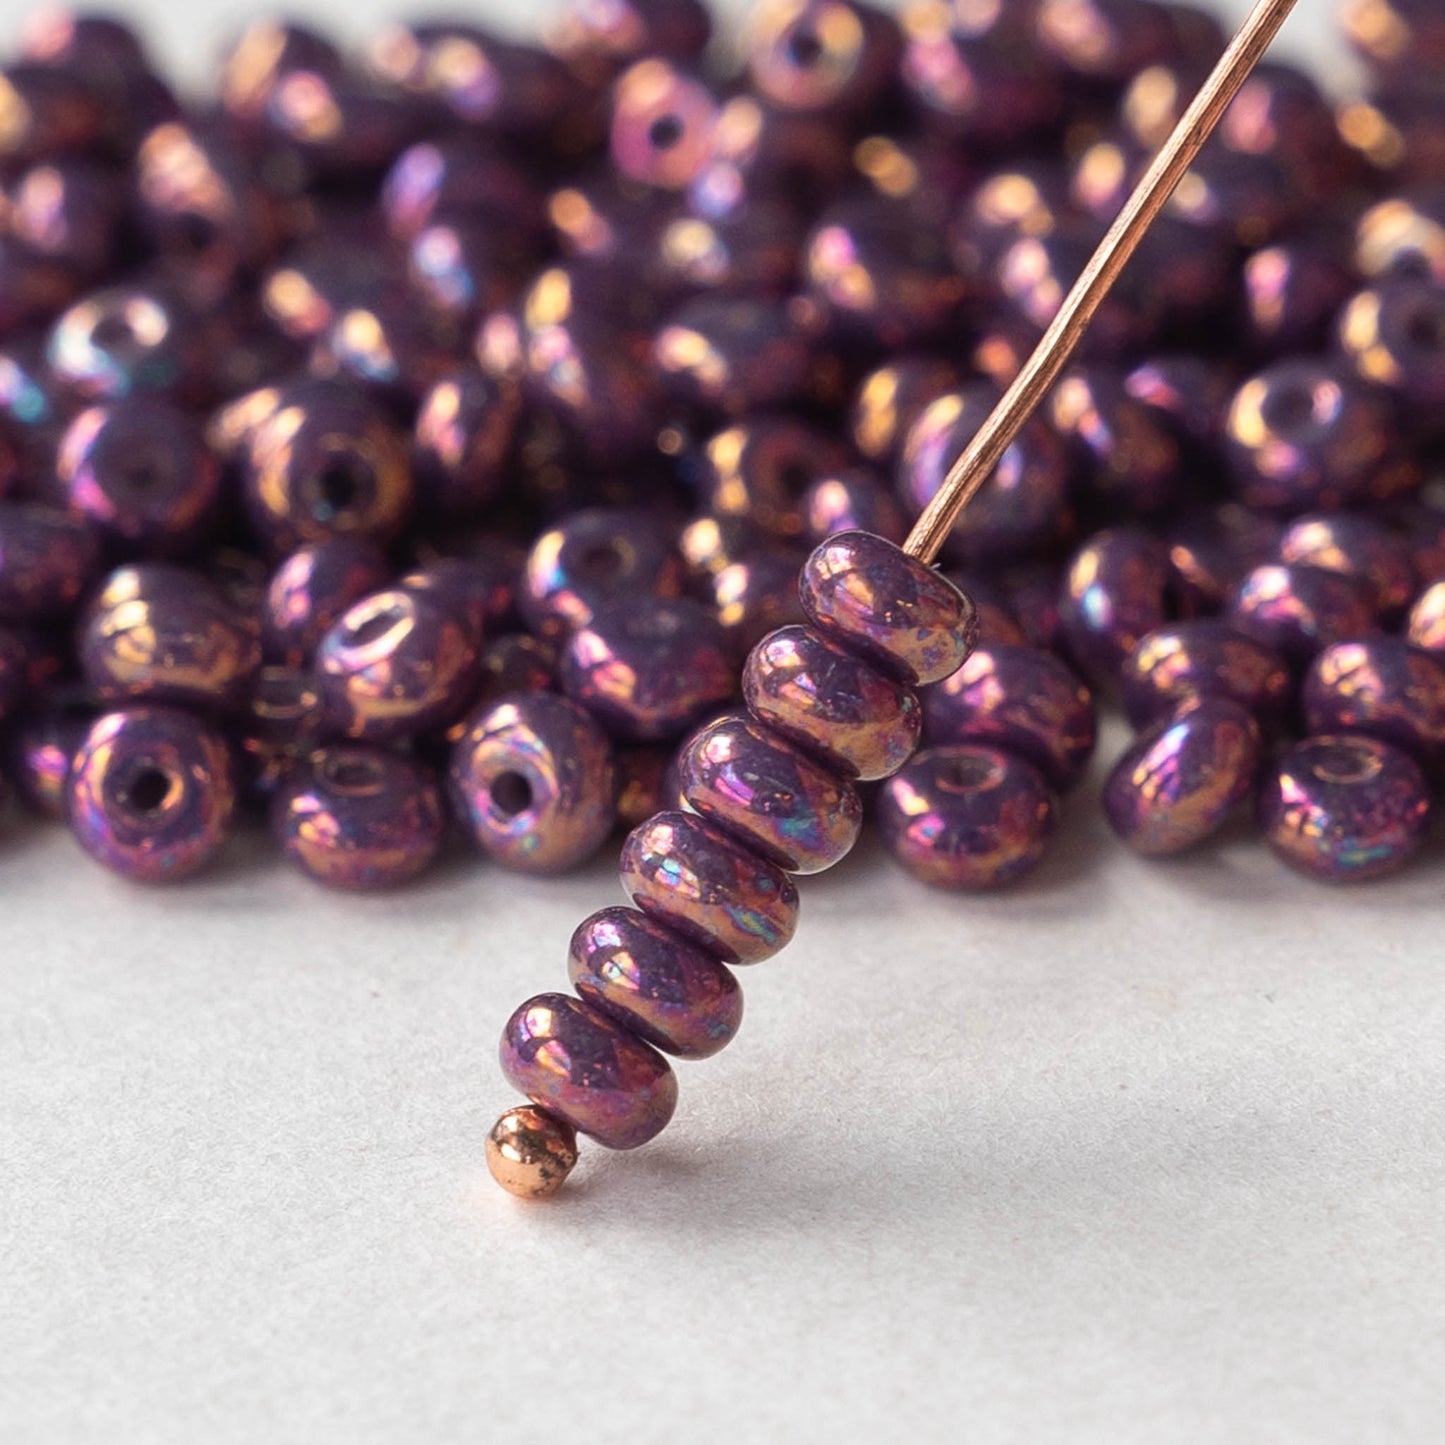 4mm Rondelle Beads - Opaque Purple Rainbow - 10 Grams